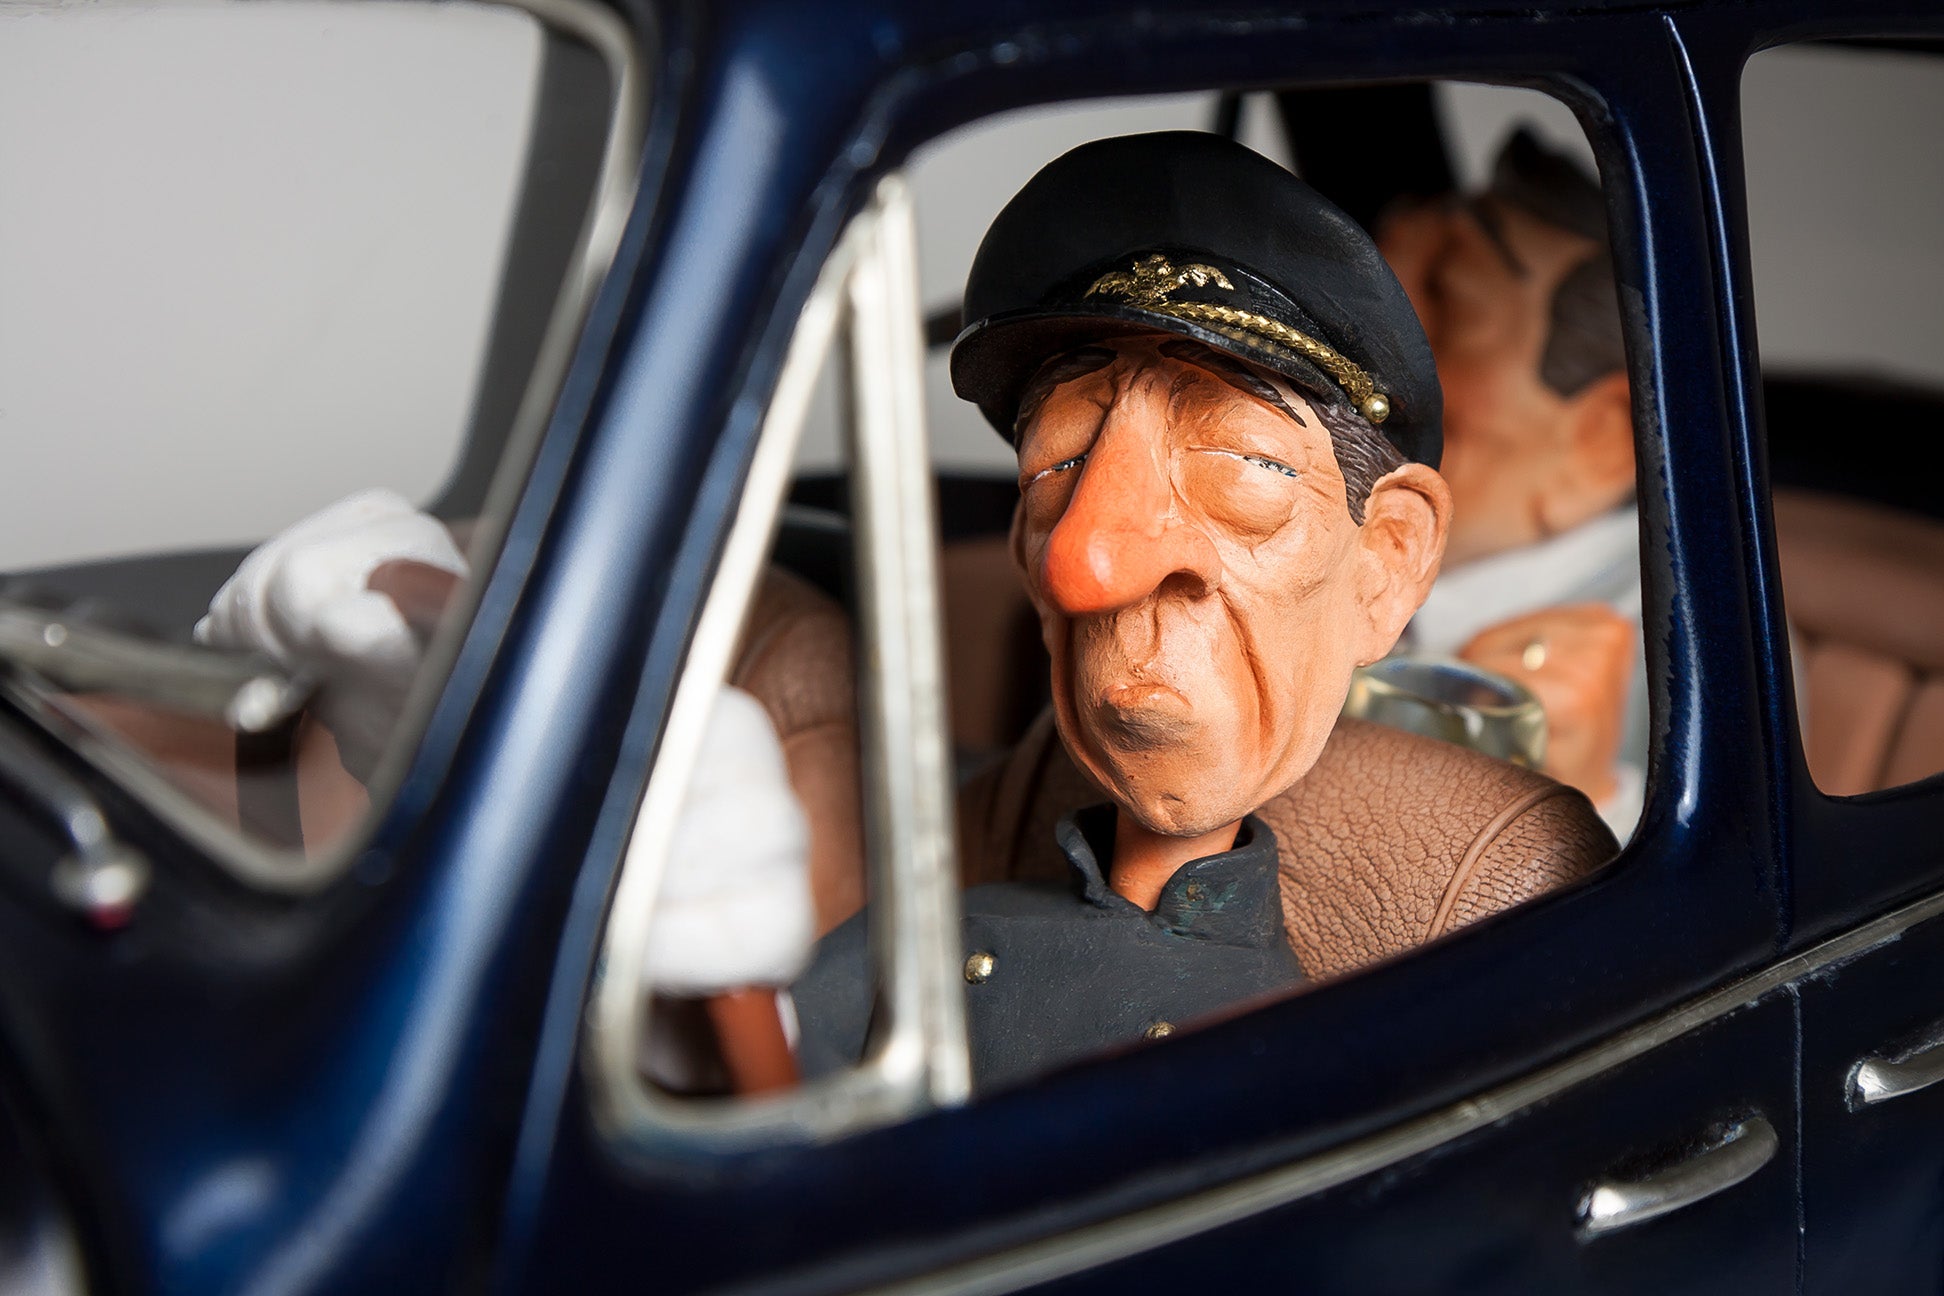 Guillermo Forchino The Big Boss Limousine Figurine Sculpture Showpiece - Large